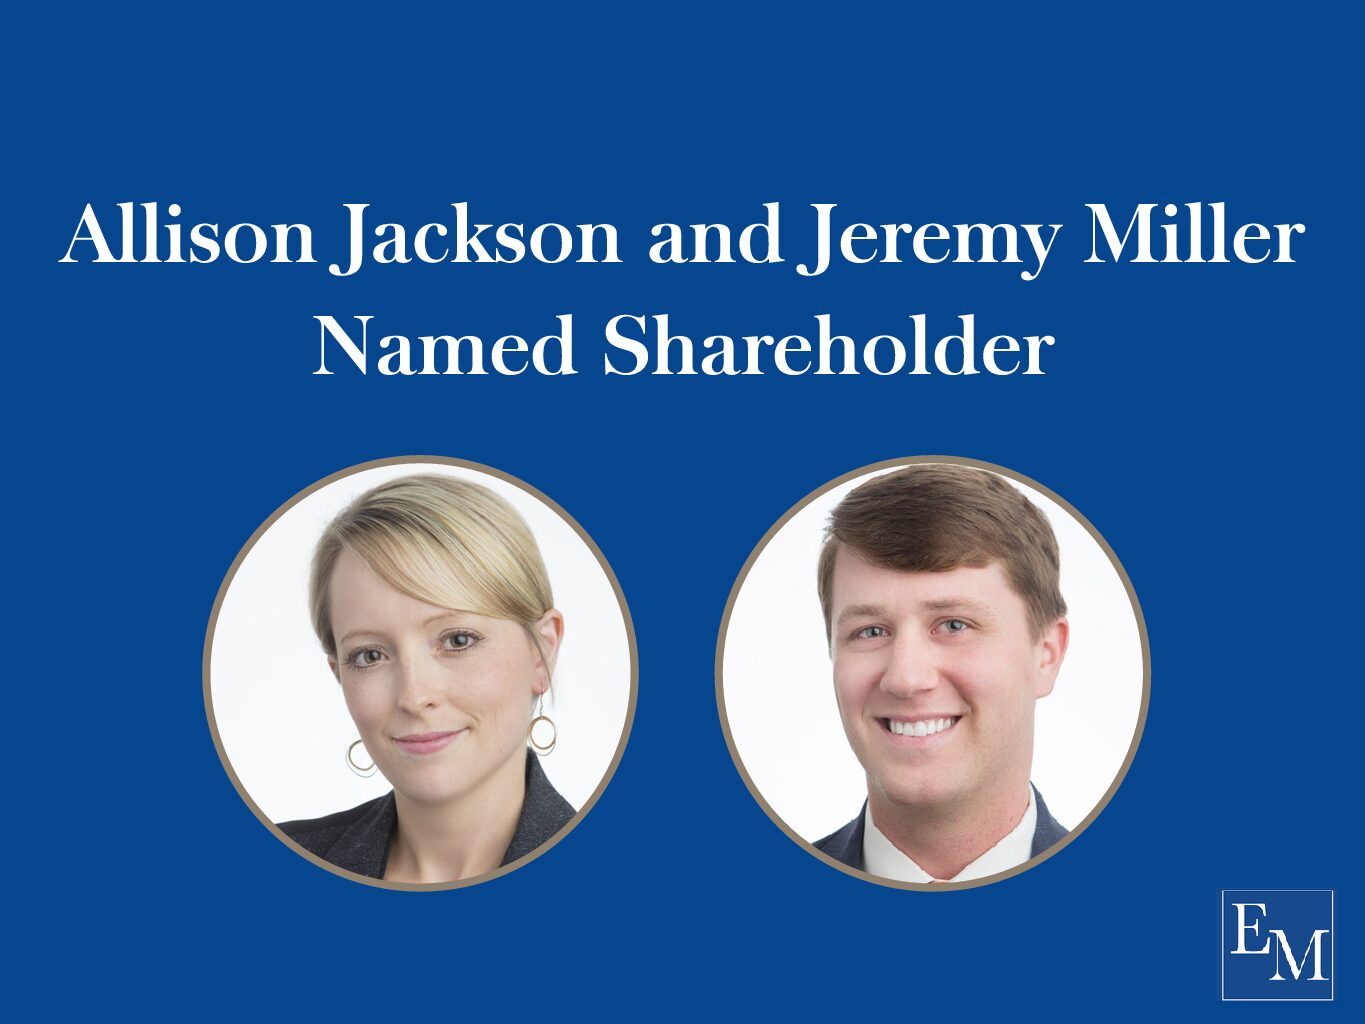 Allison Jackson and Jeremy Miller named Shareholder